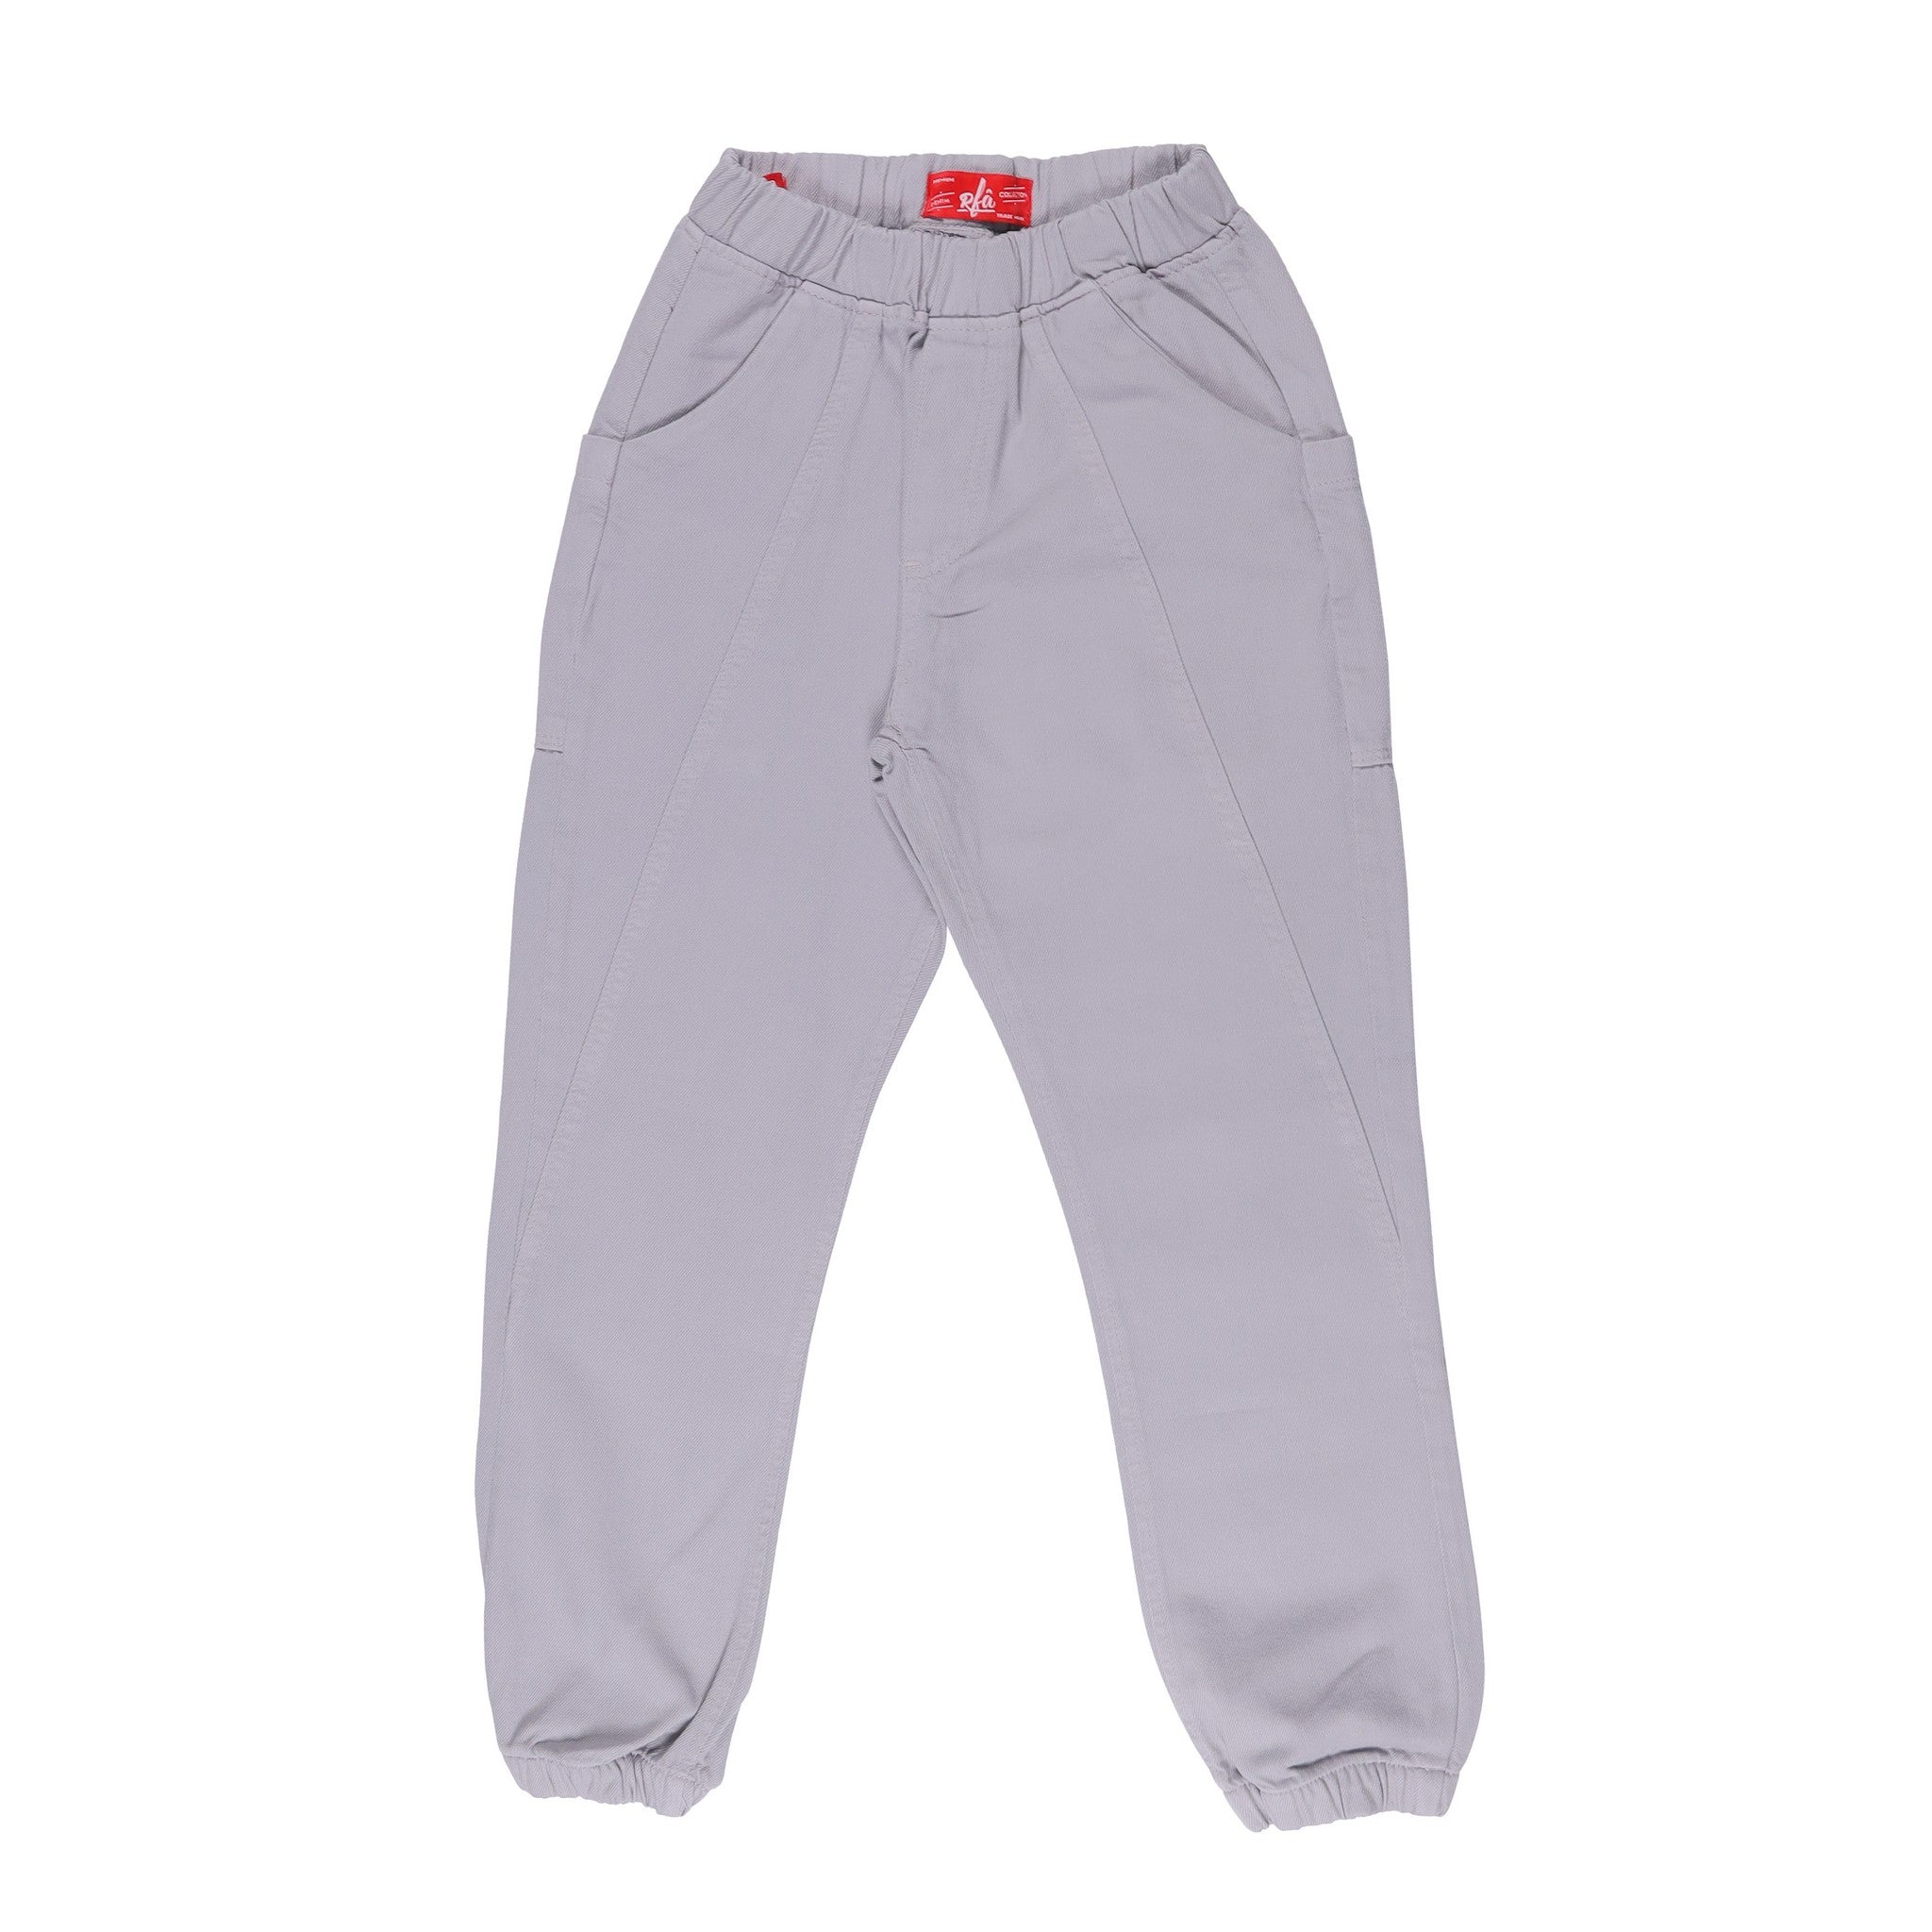 Cargo Fit Grey Pants